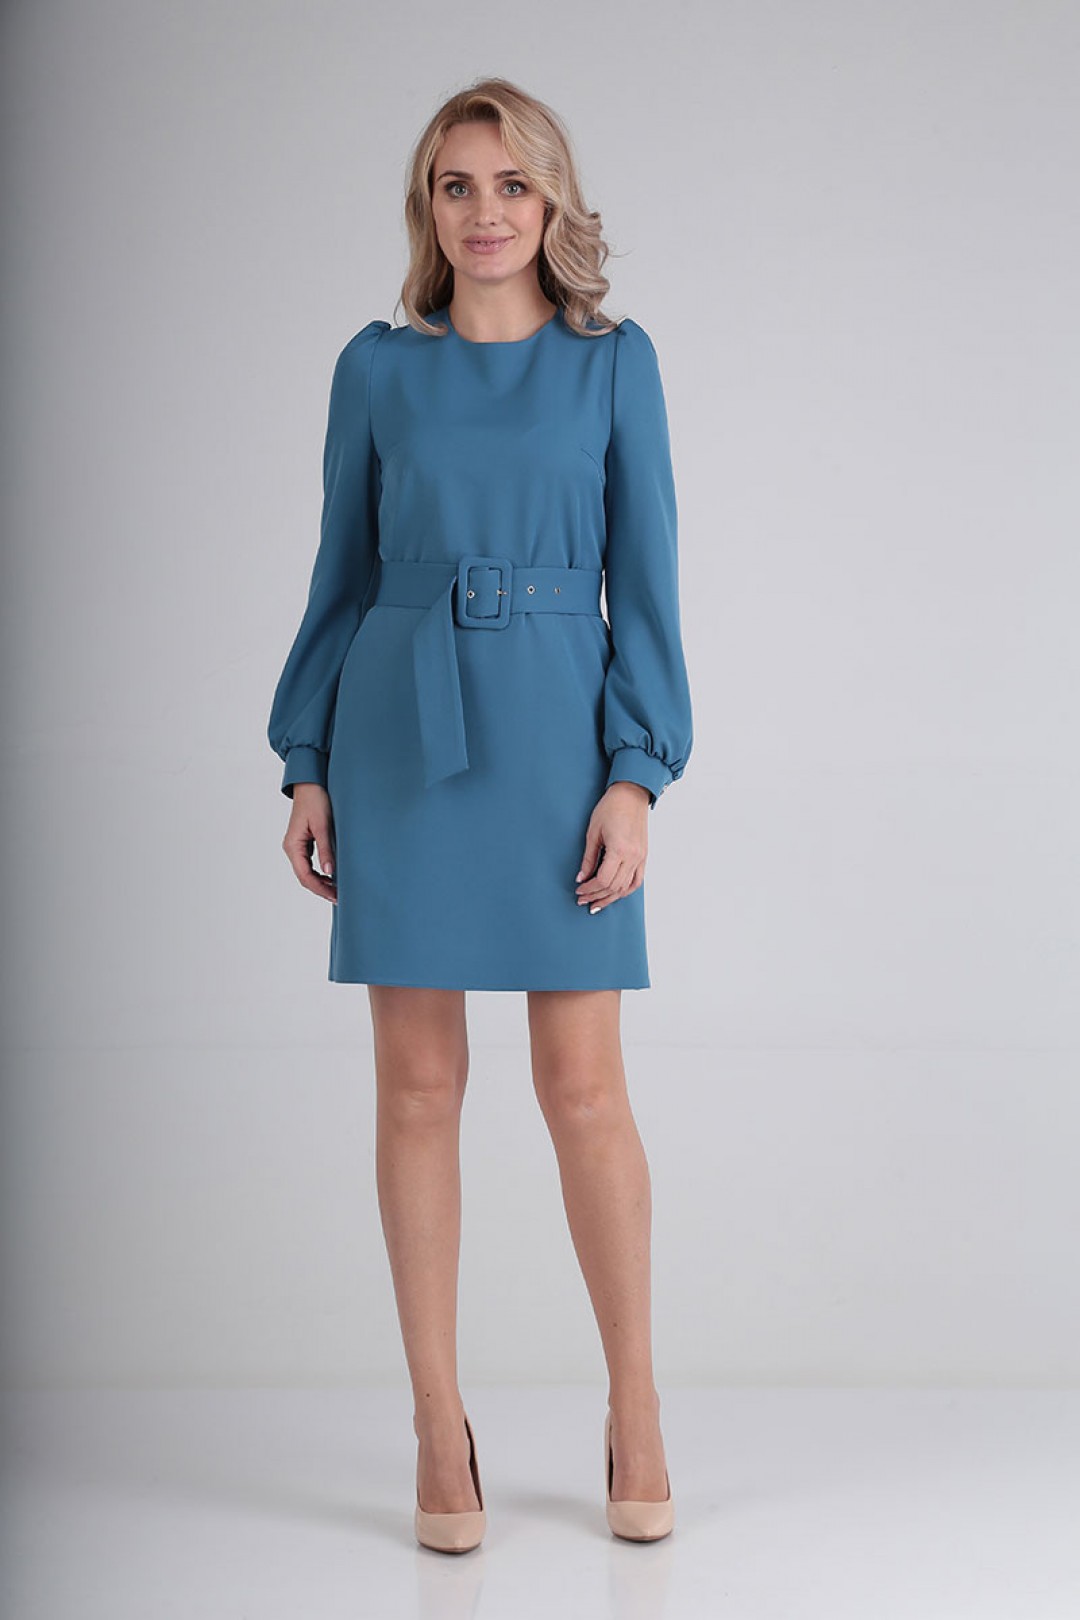 Платье Мода-Версаль 2276 голубой